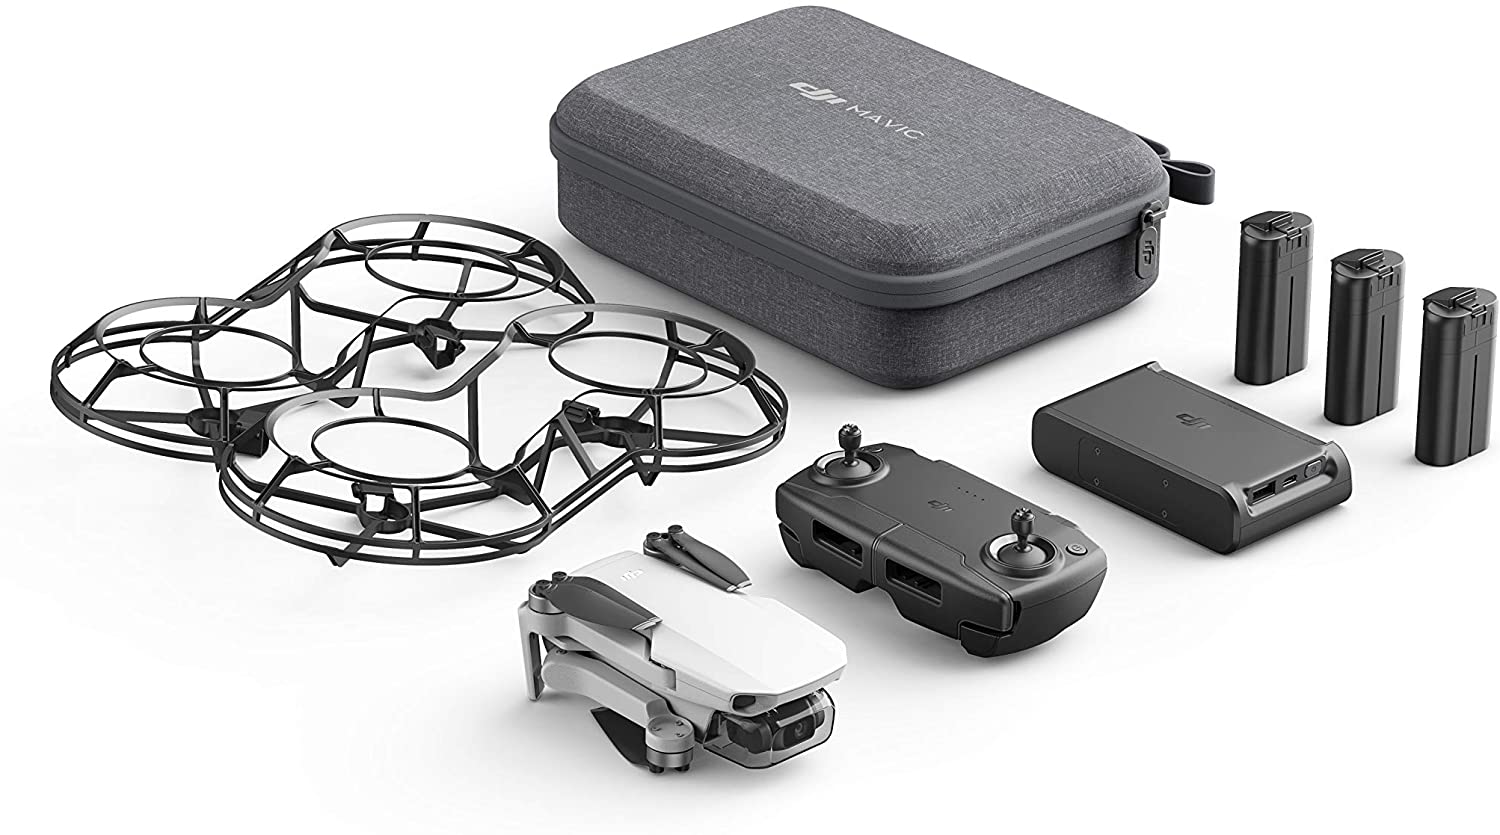 DJI Mavic Mini Drone FlyCam Quadcopter Combo $298.99 + Free Shipping via Amazon